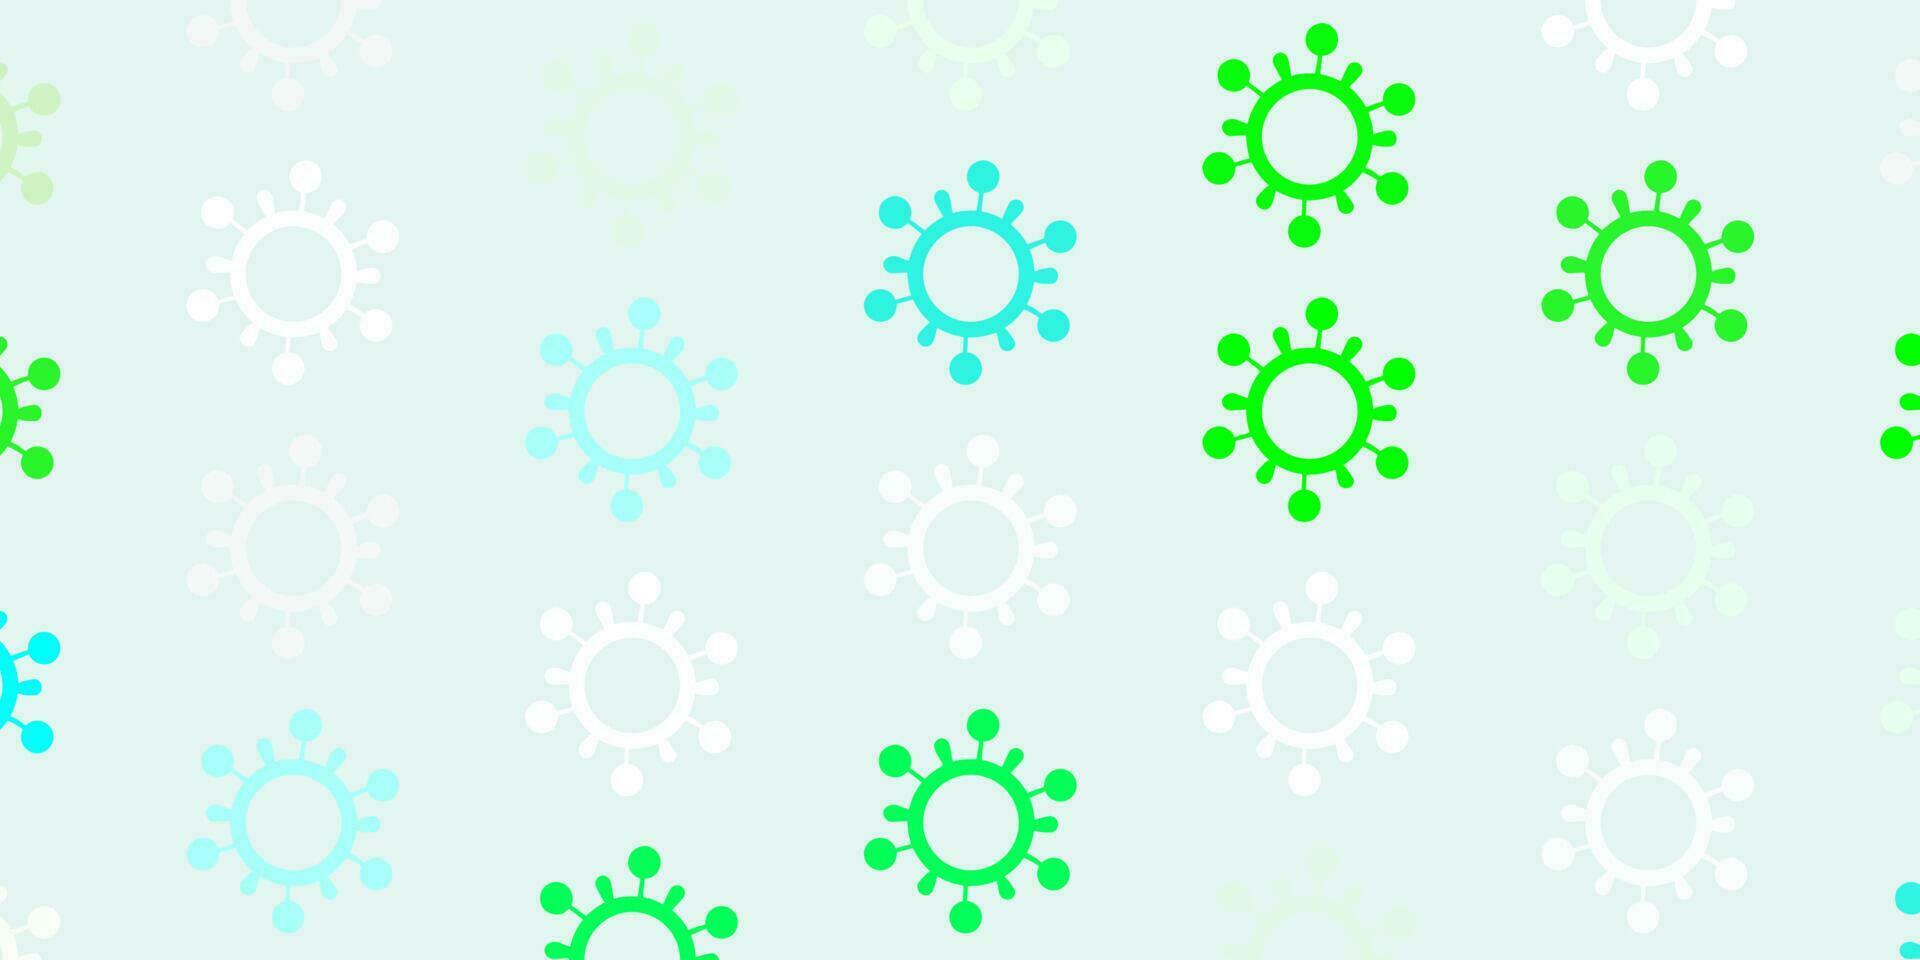 Light Green vector backdrop with virus symbols.